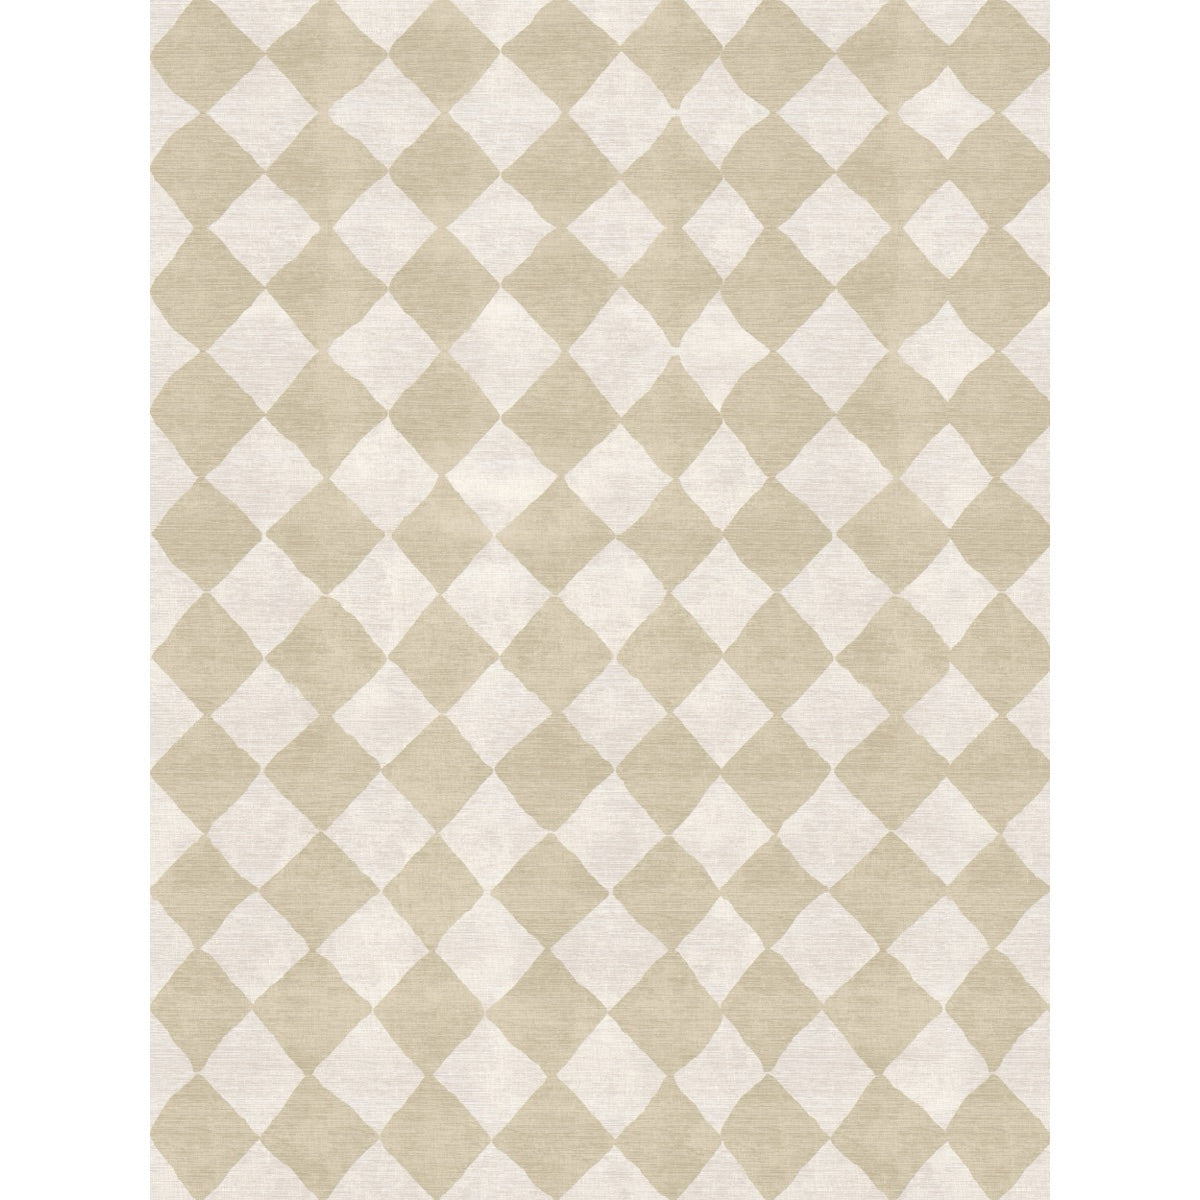 Trestres Checkered Natural & Ivory Rug